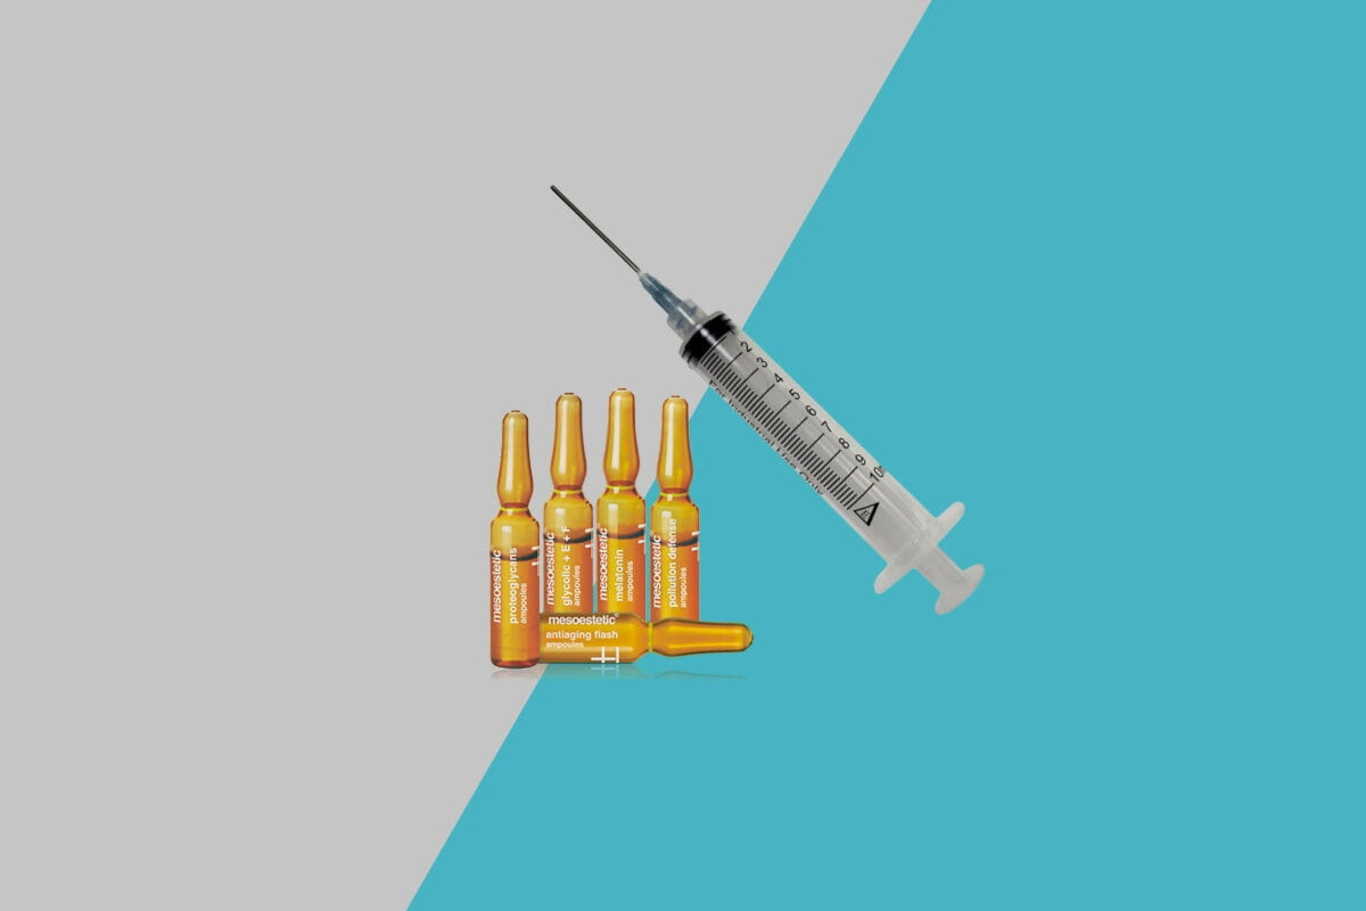 تزریق همزمان واکسن کرونا و آنفلوآنزا خطرناک است؟